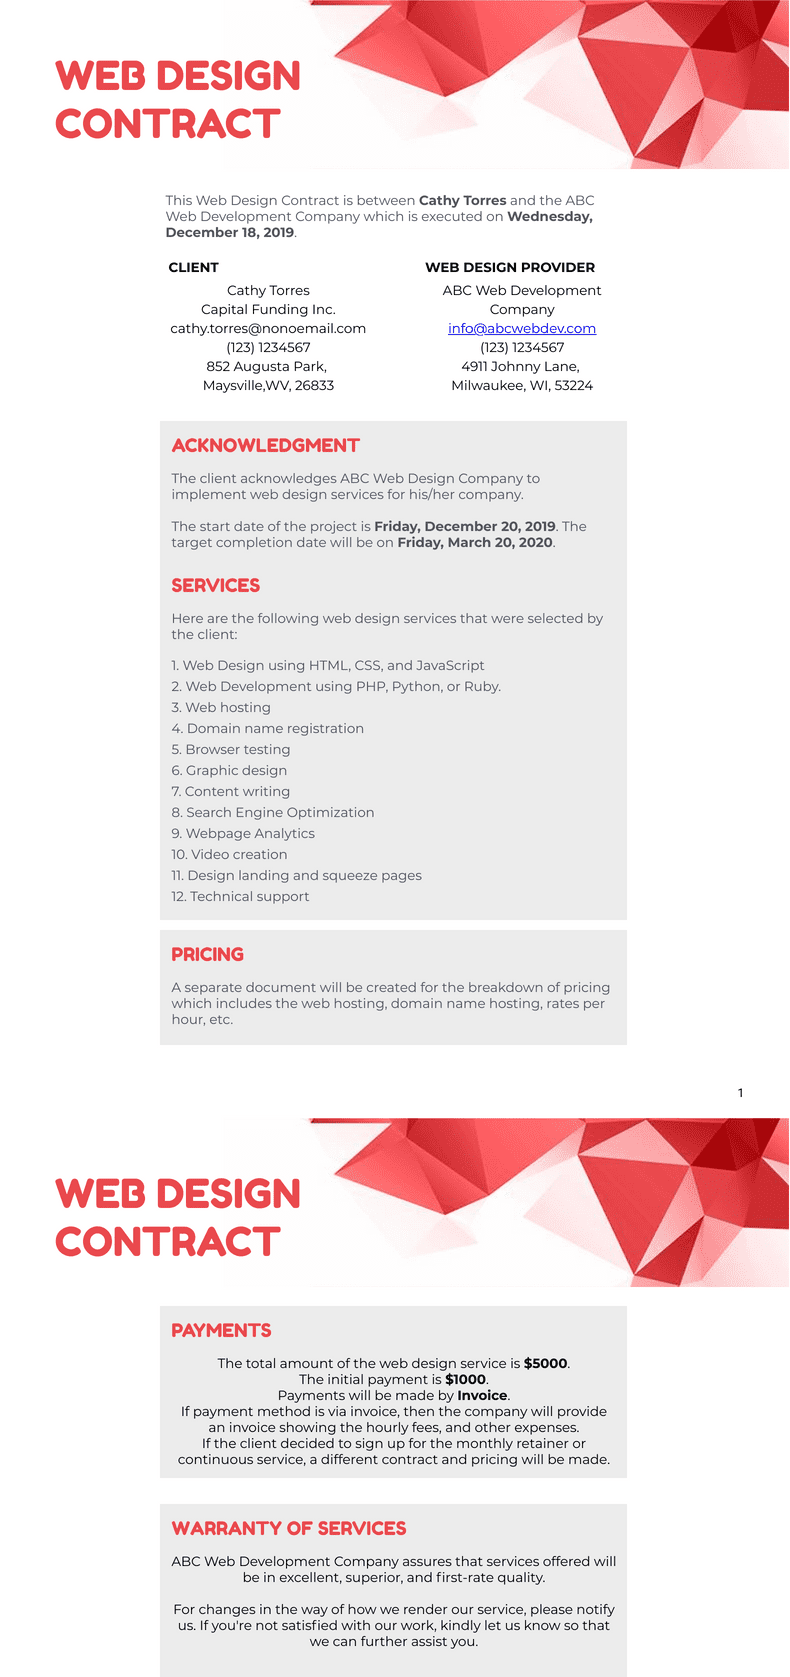 PDF Templates: Web Design Contract Template